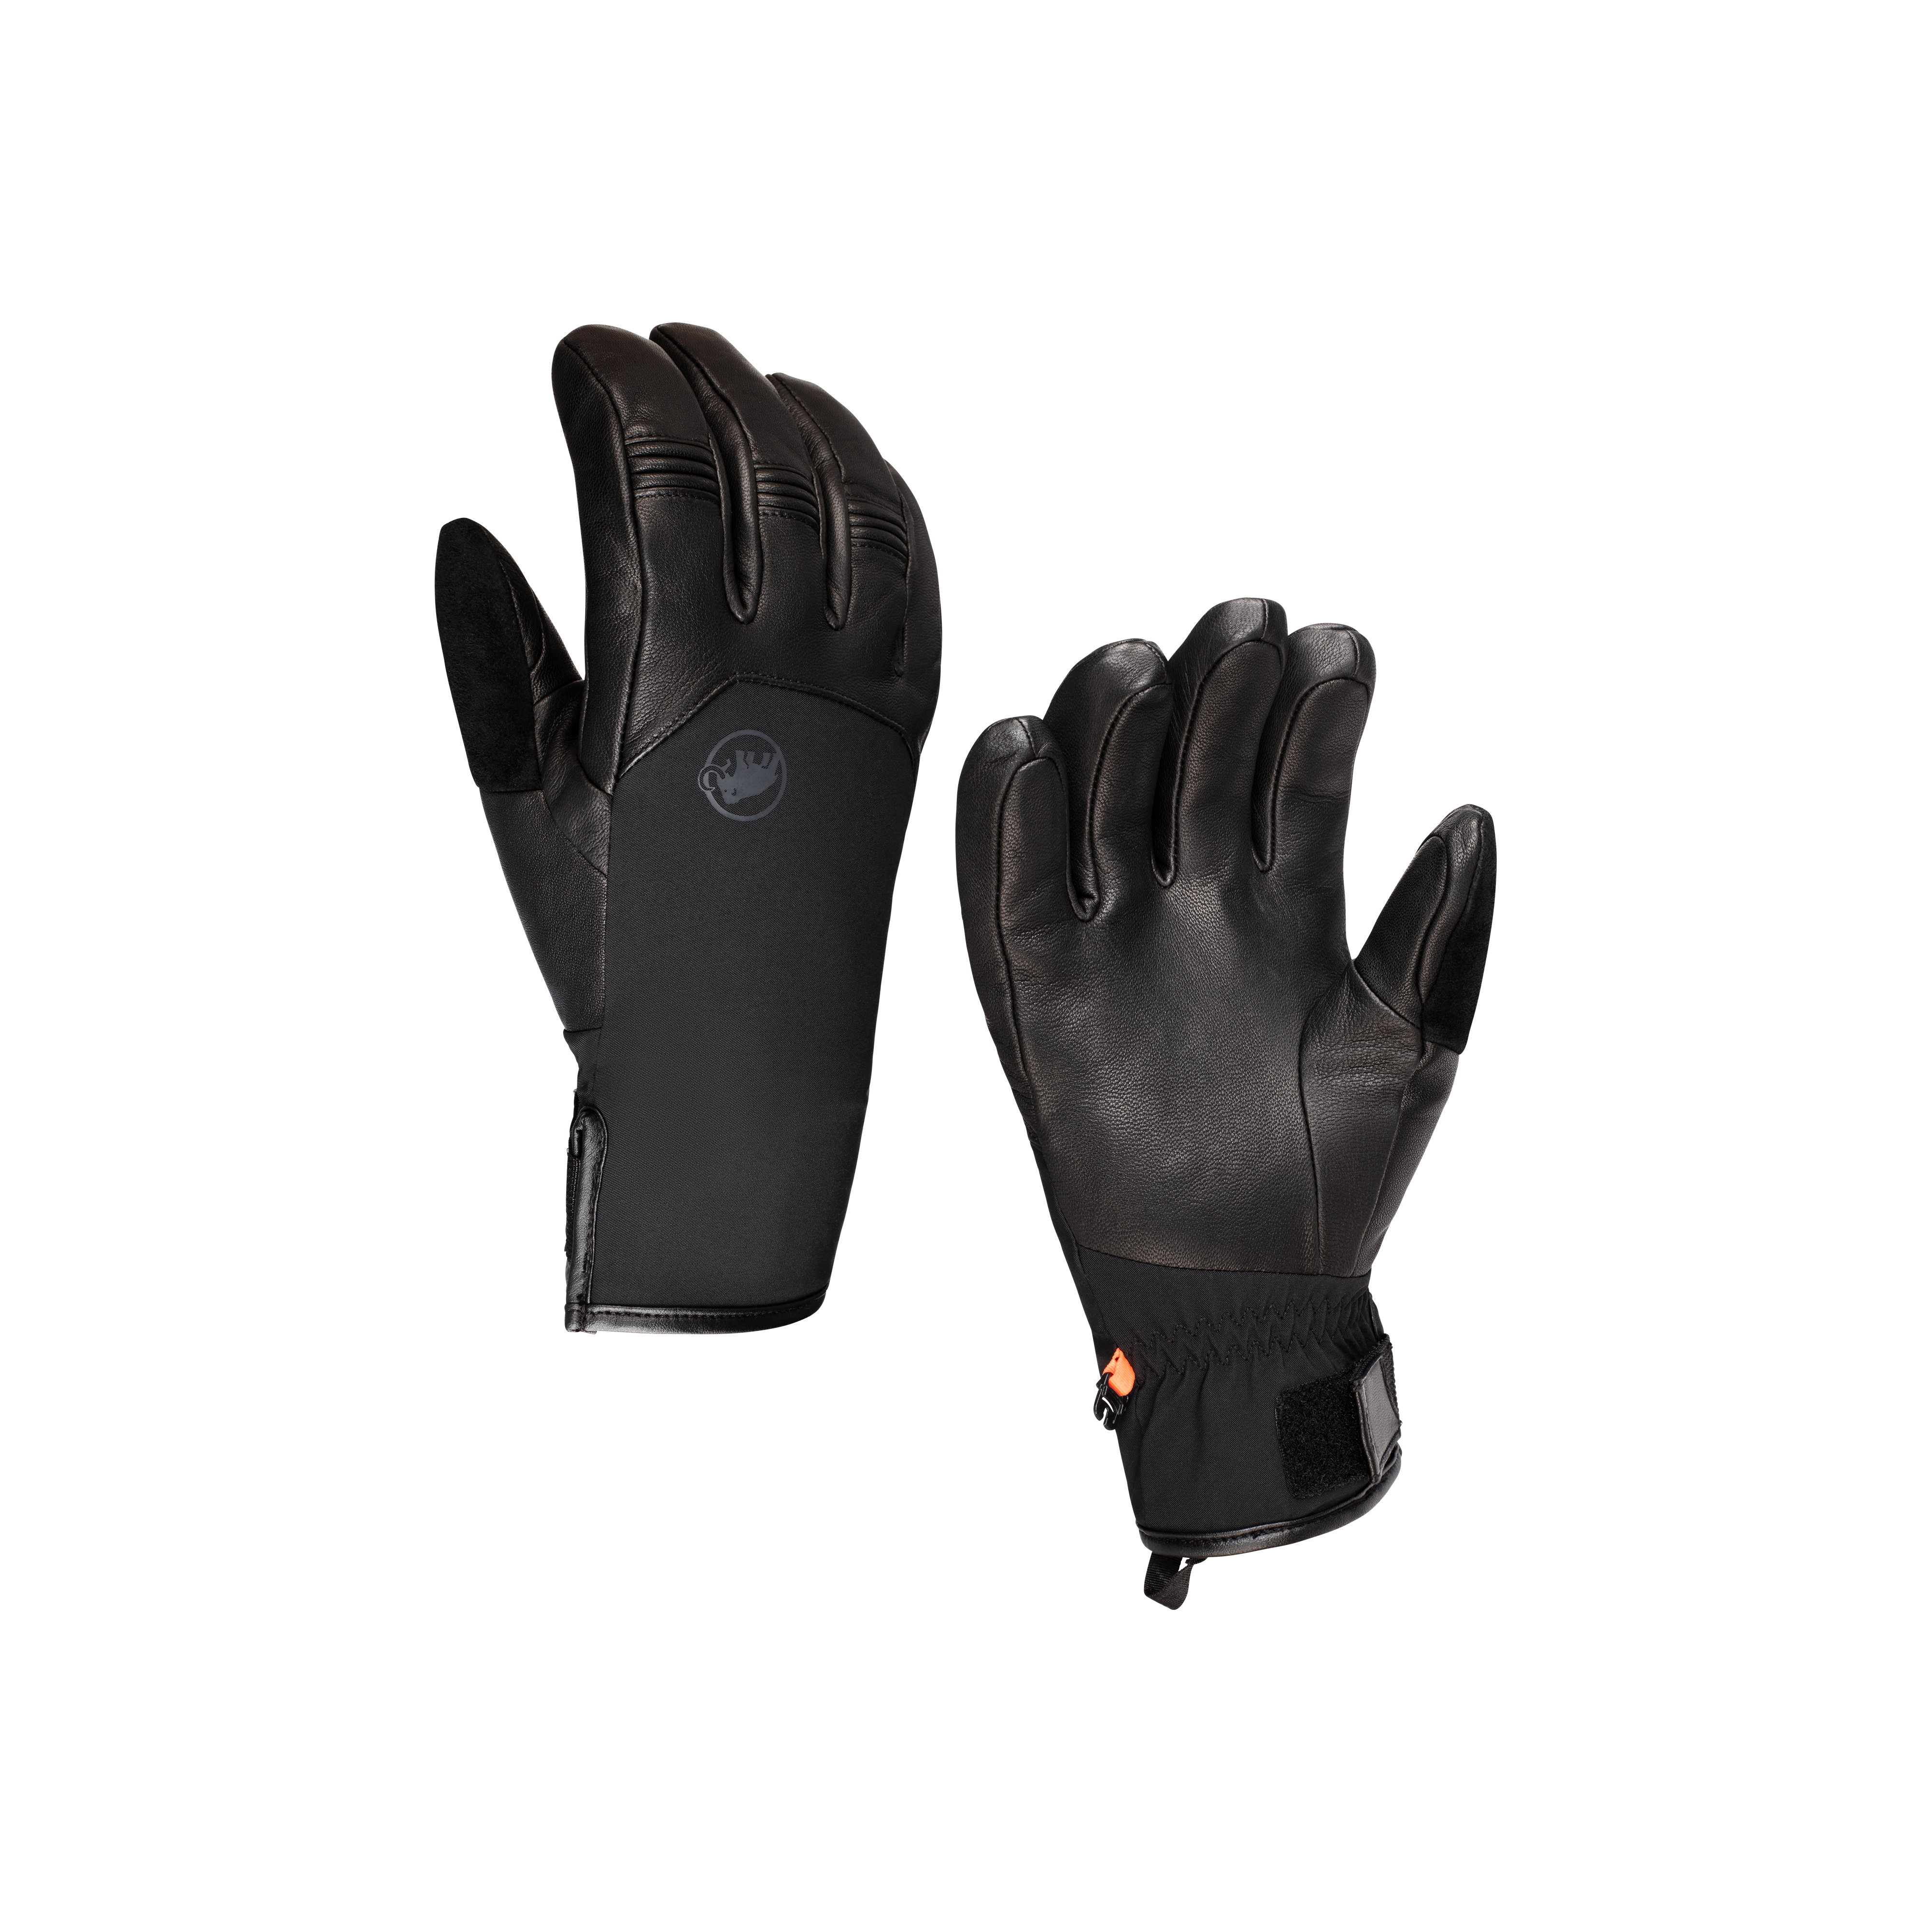 Stoney Glove - black thumbnail